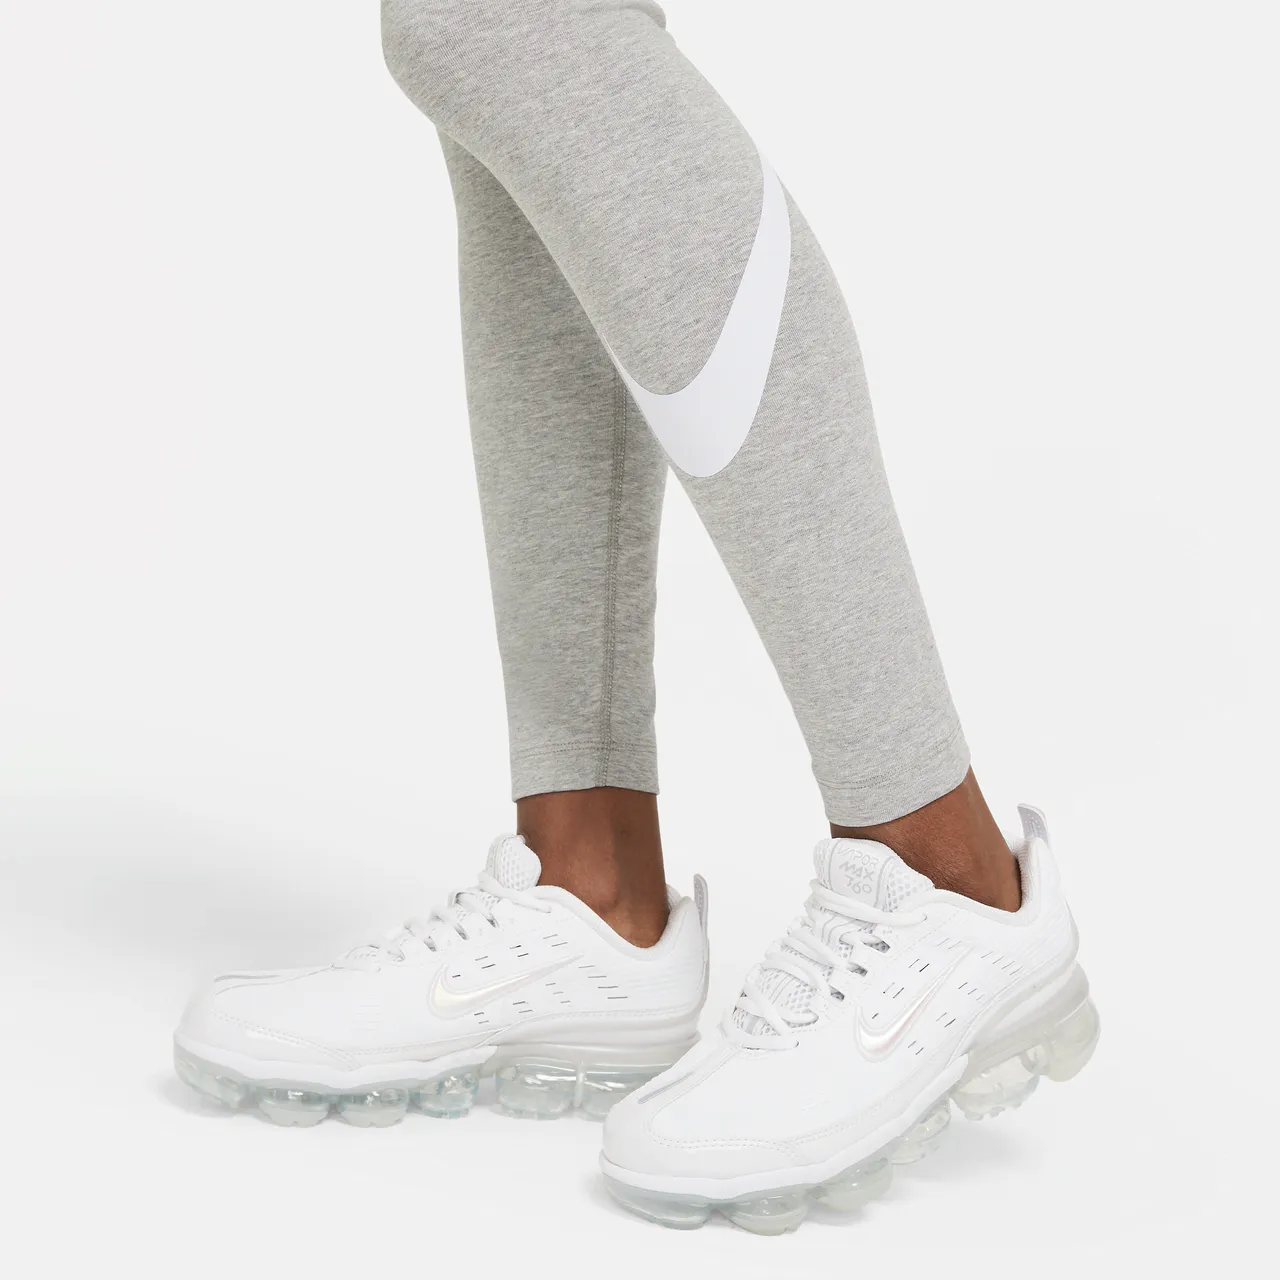 Nike Sportswear Essential Legging met halfhoge taille en Swoosh voor dames - Grijs